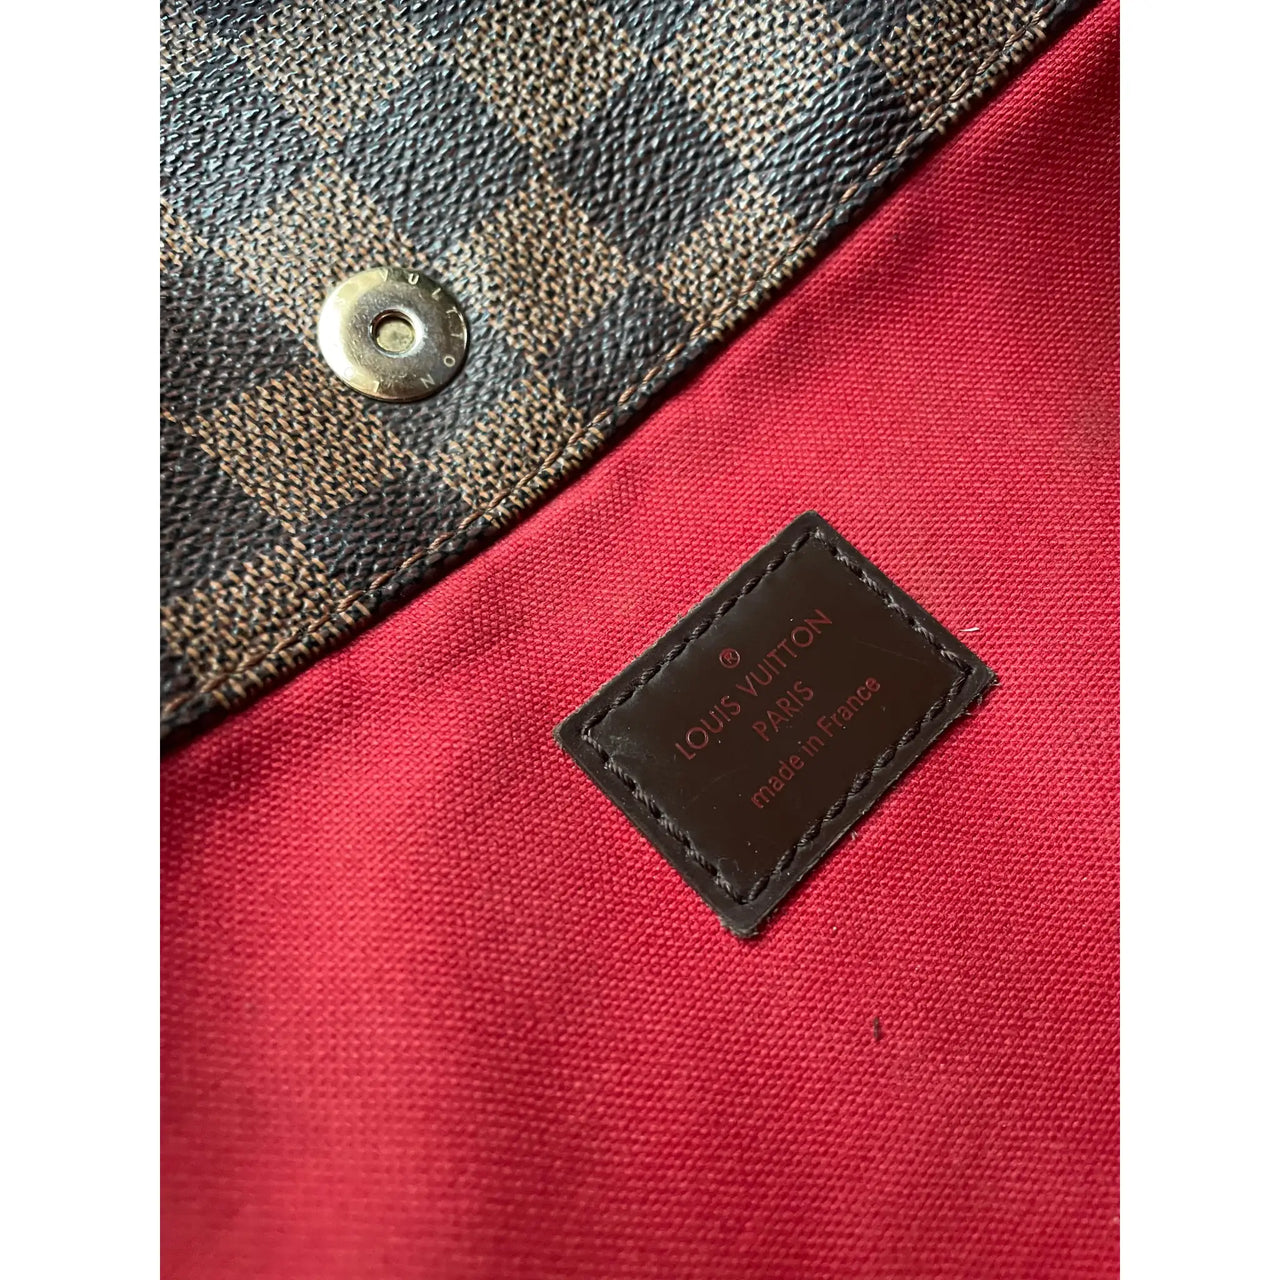 Authentic Louis Vuitton Bloomsbury PM crossbody shoulder bag